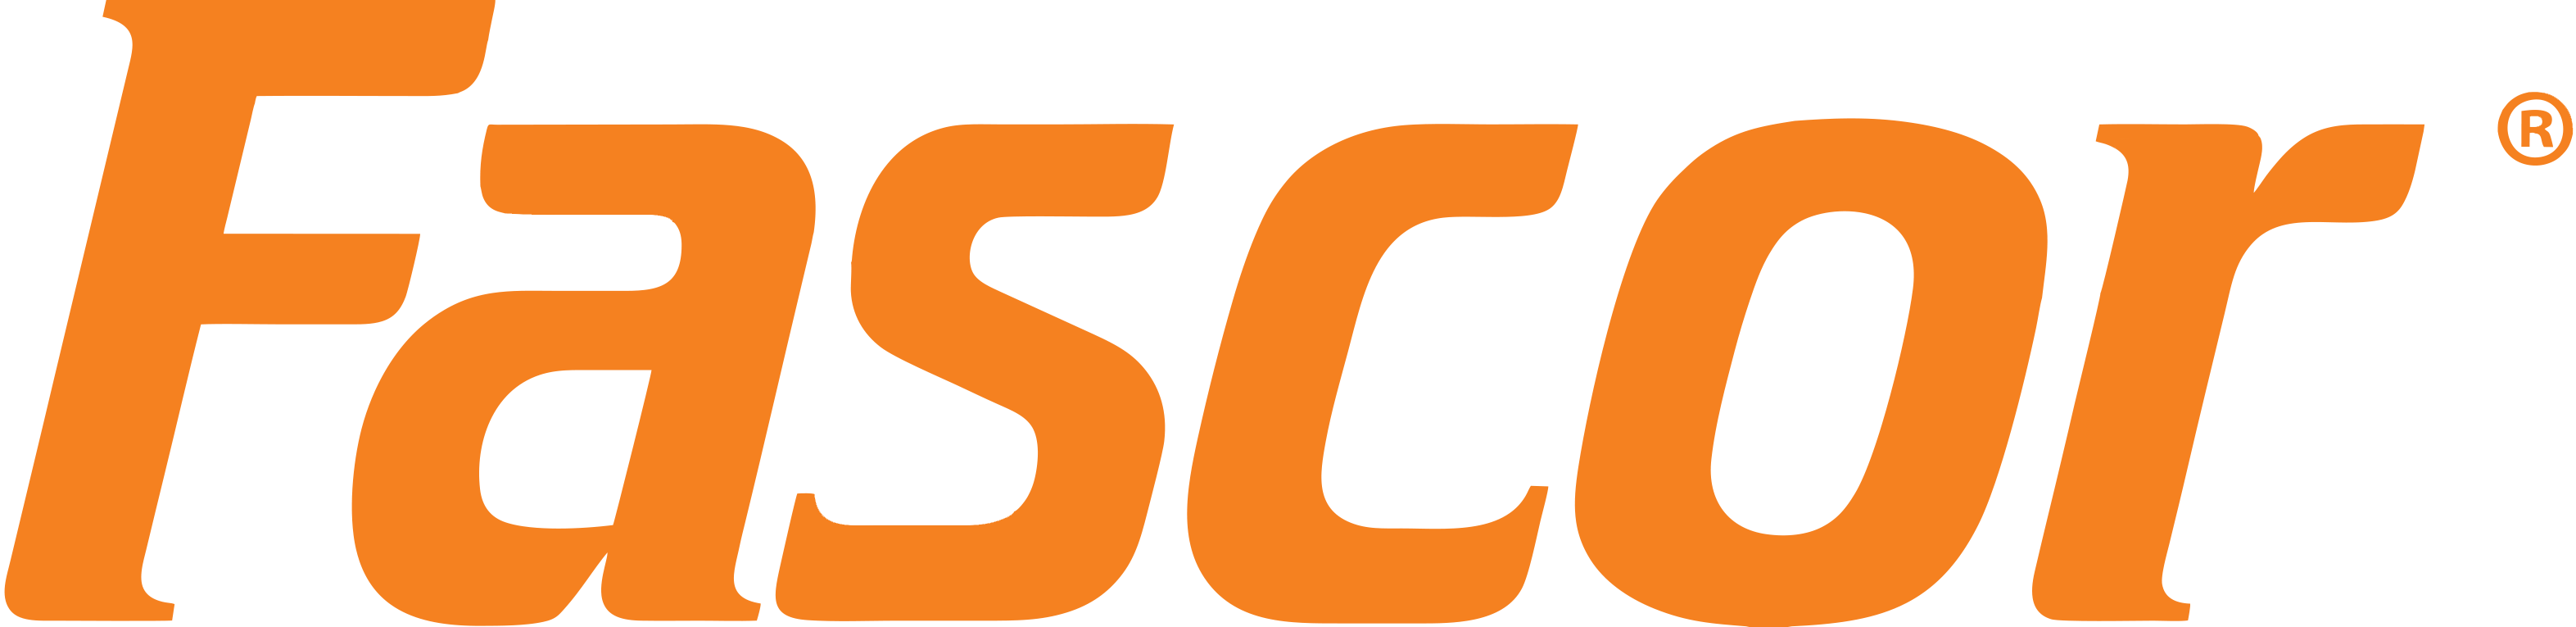 FASCOR logo